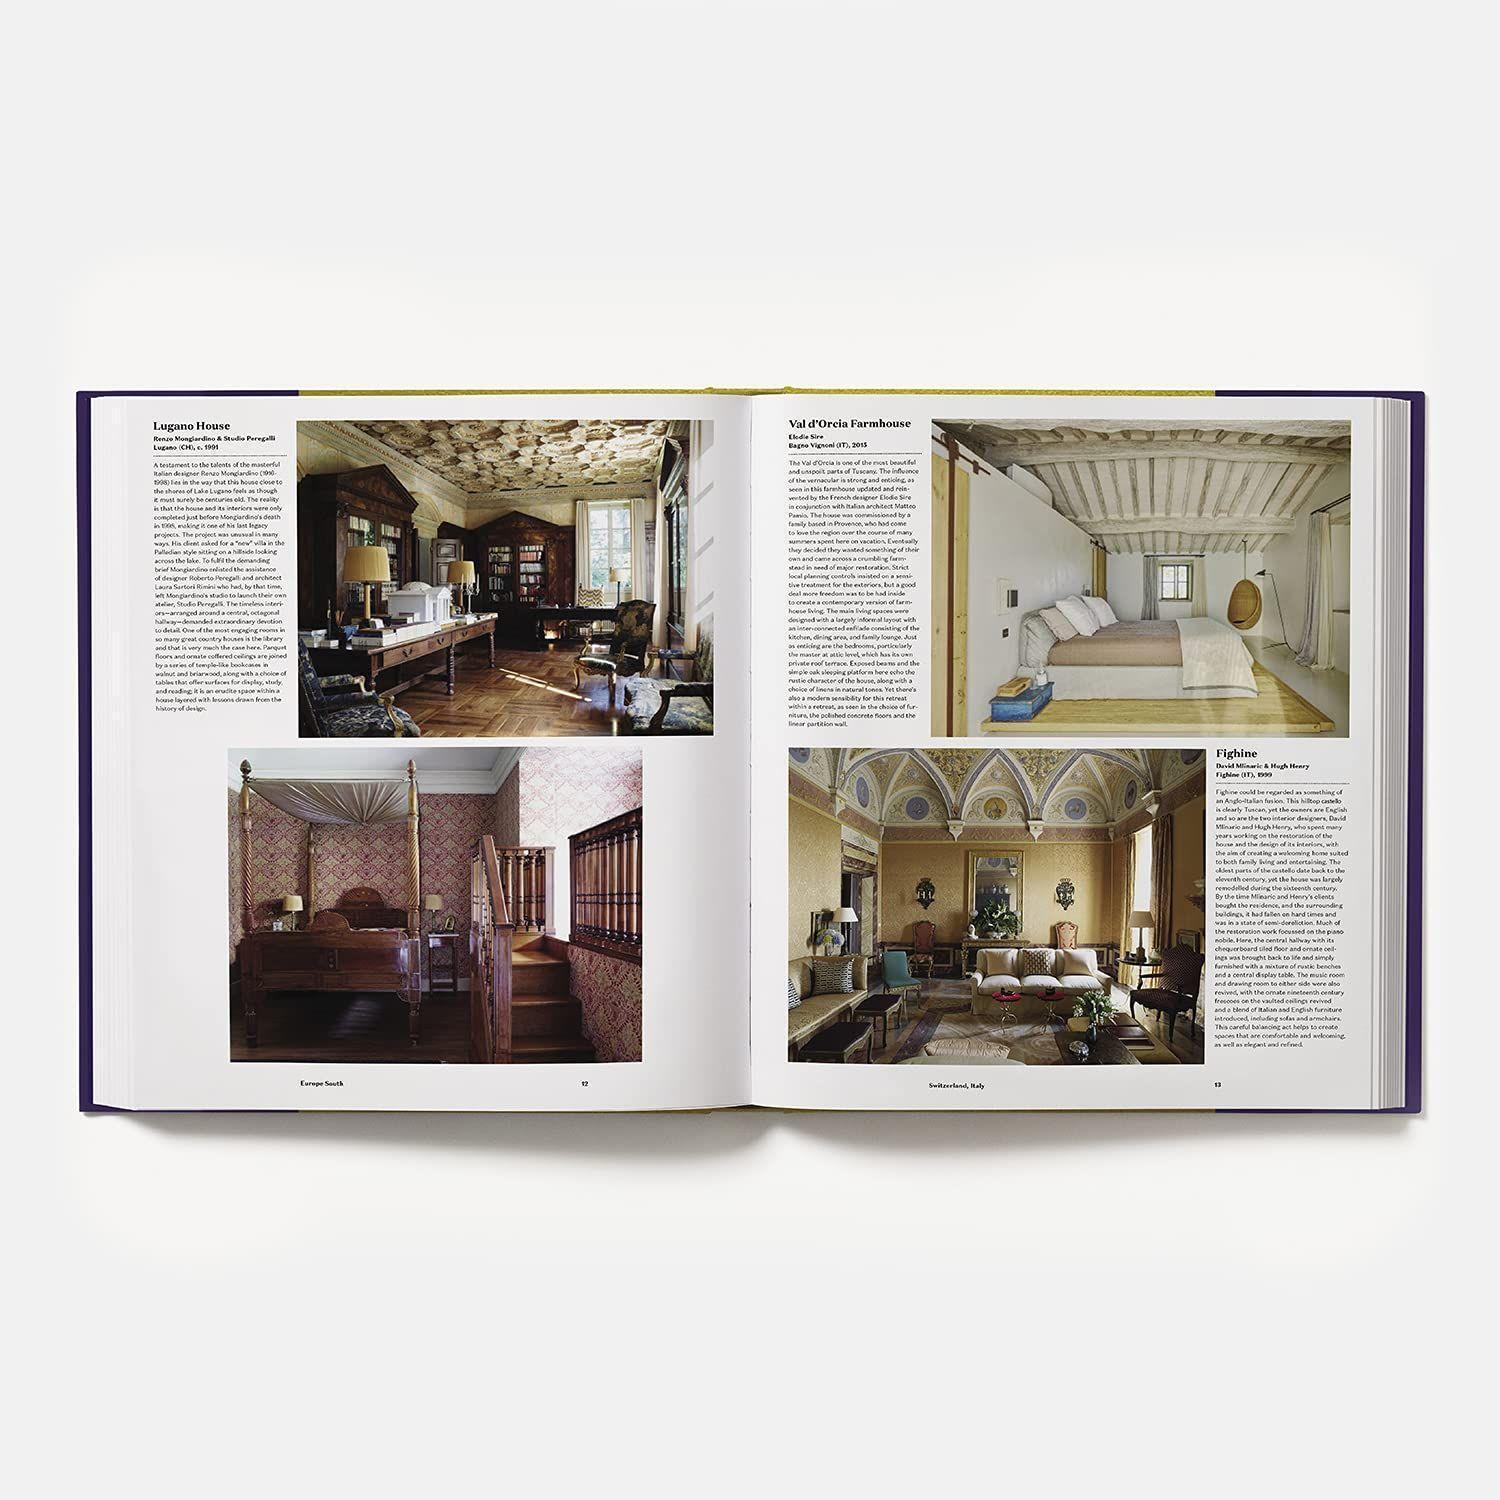 Bild: 9781838663063 | Atlas of Interior Design | Dominic Bradbury | Buch | Englisch | 2021